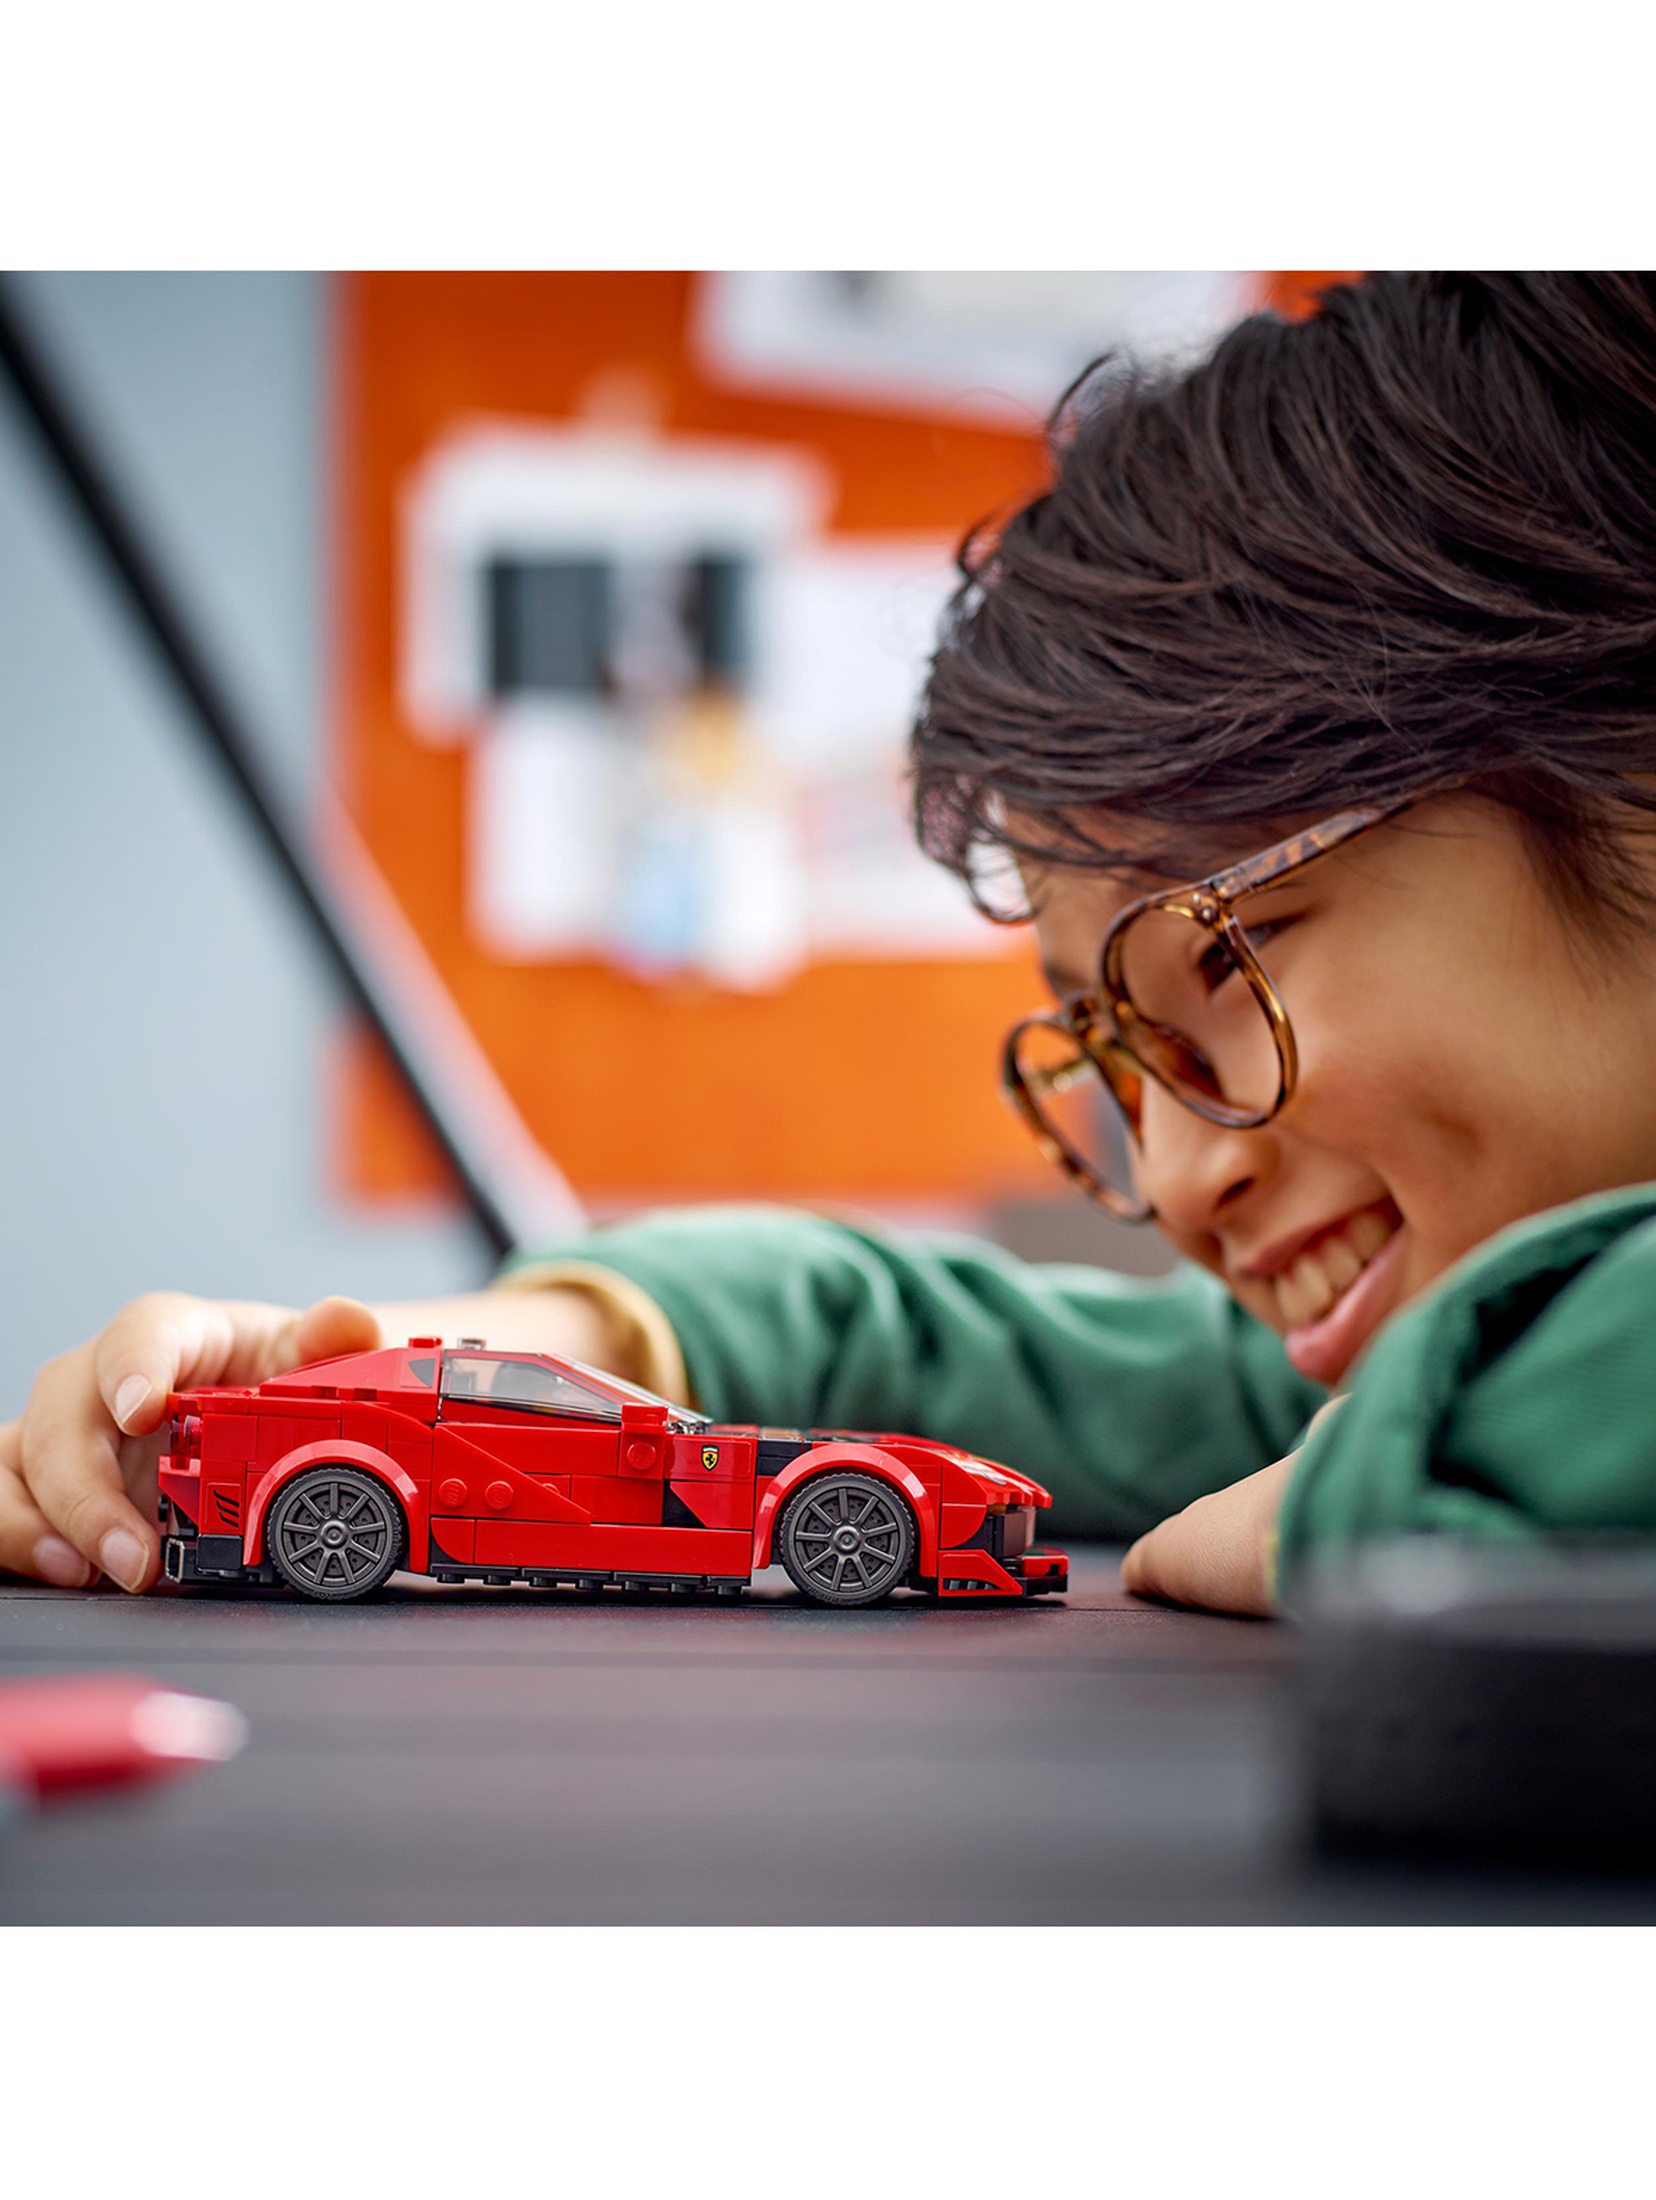 Klocki LEGO Speed Champions 76914 Ferrari 812 Competizione - 261 elementów, wiek 9 +